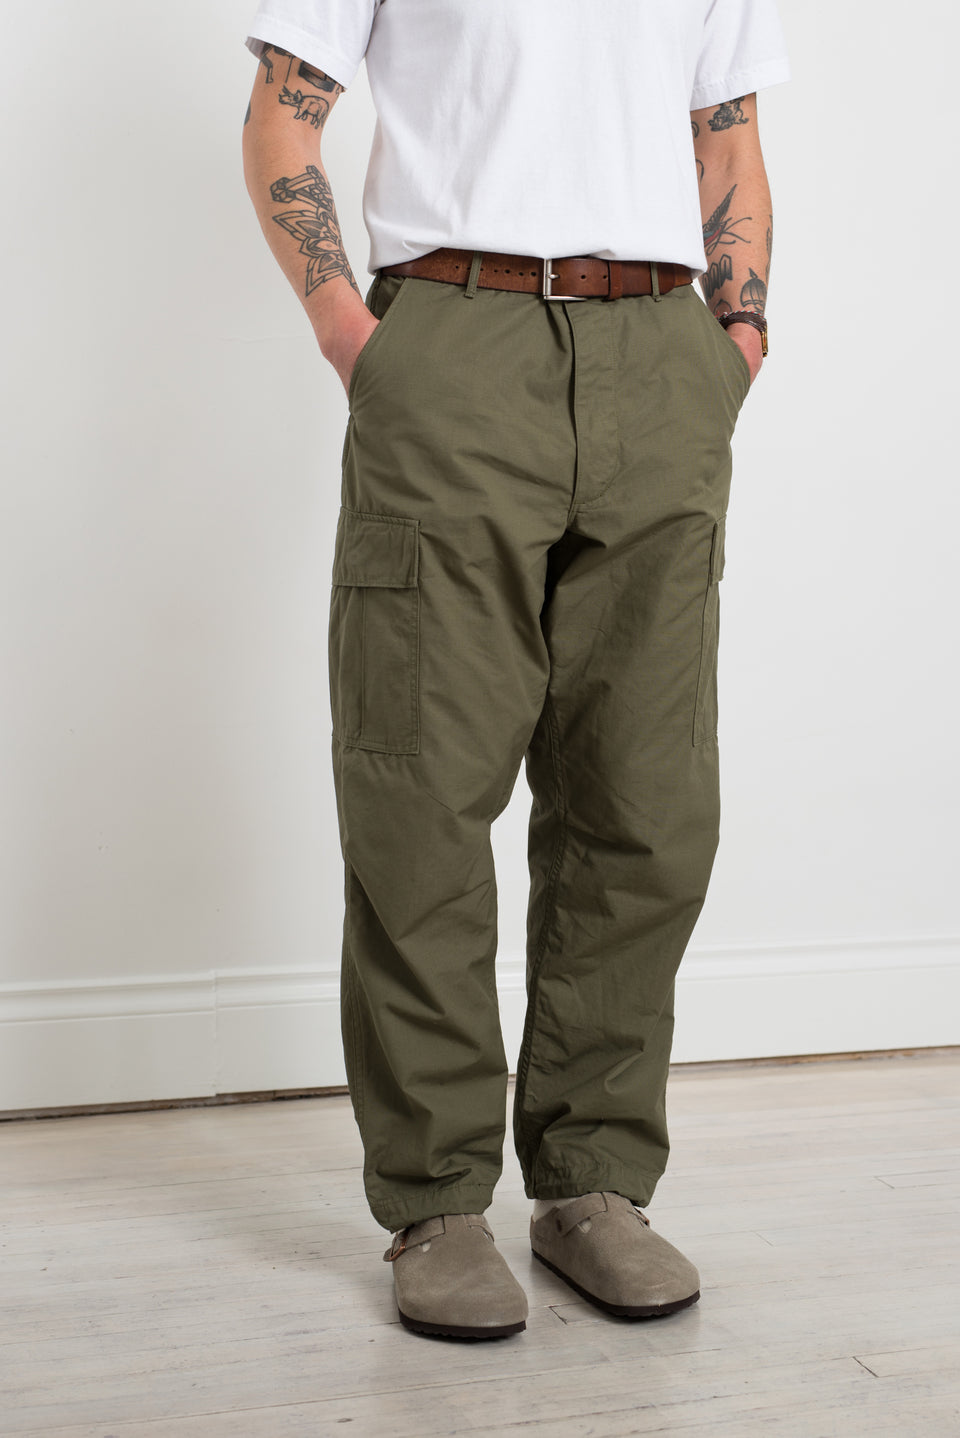 hoksml Cargo Pants Women Cargo Trousers Work Wear Combat Safety Cargo 6  Pocket Full Pants Clearance